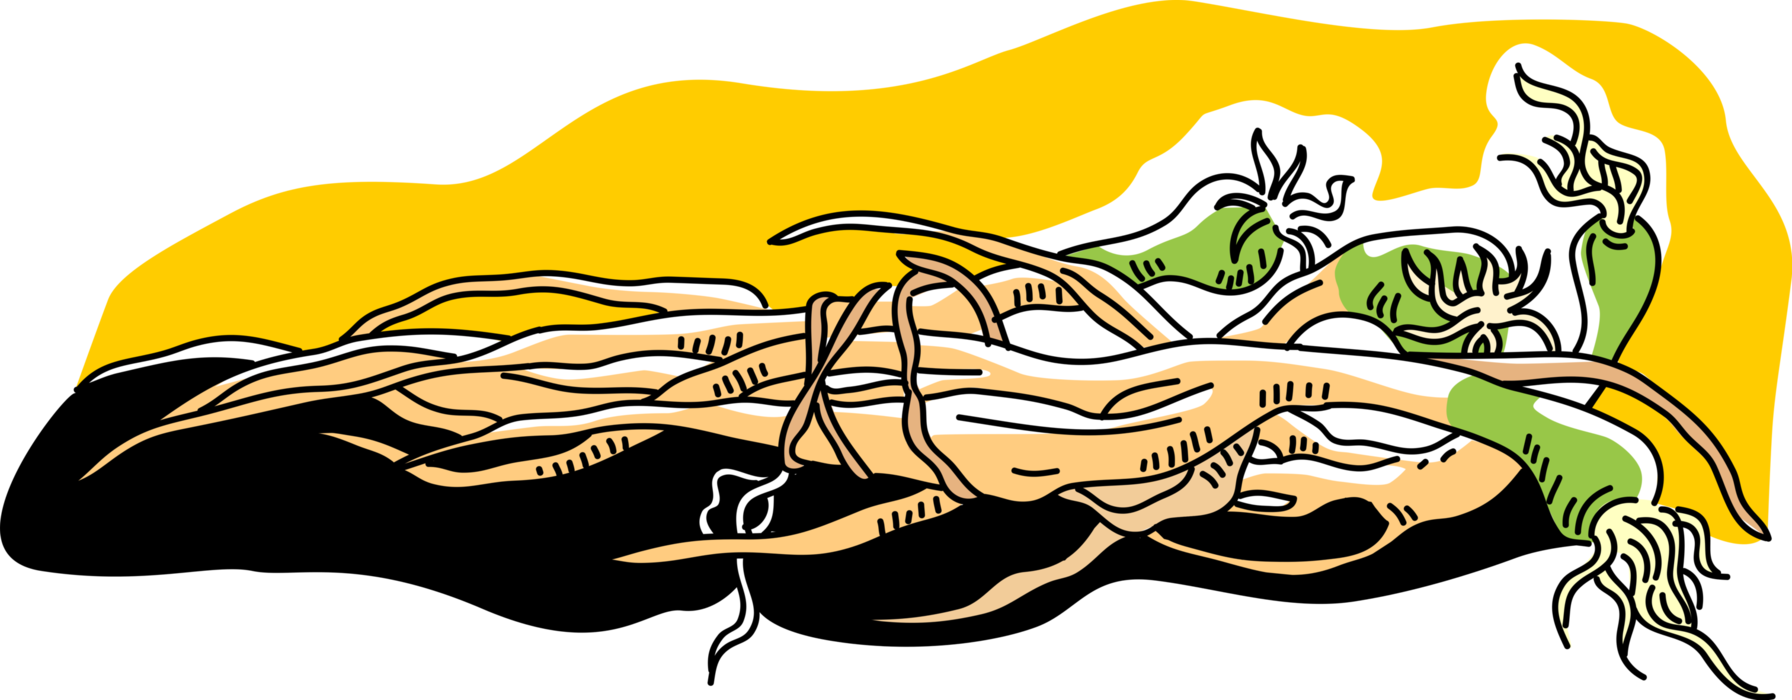 Vector Illustration of Root Vegetable Parsnips